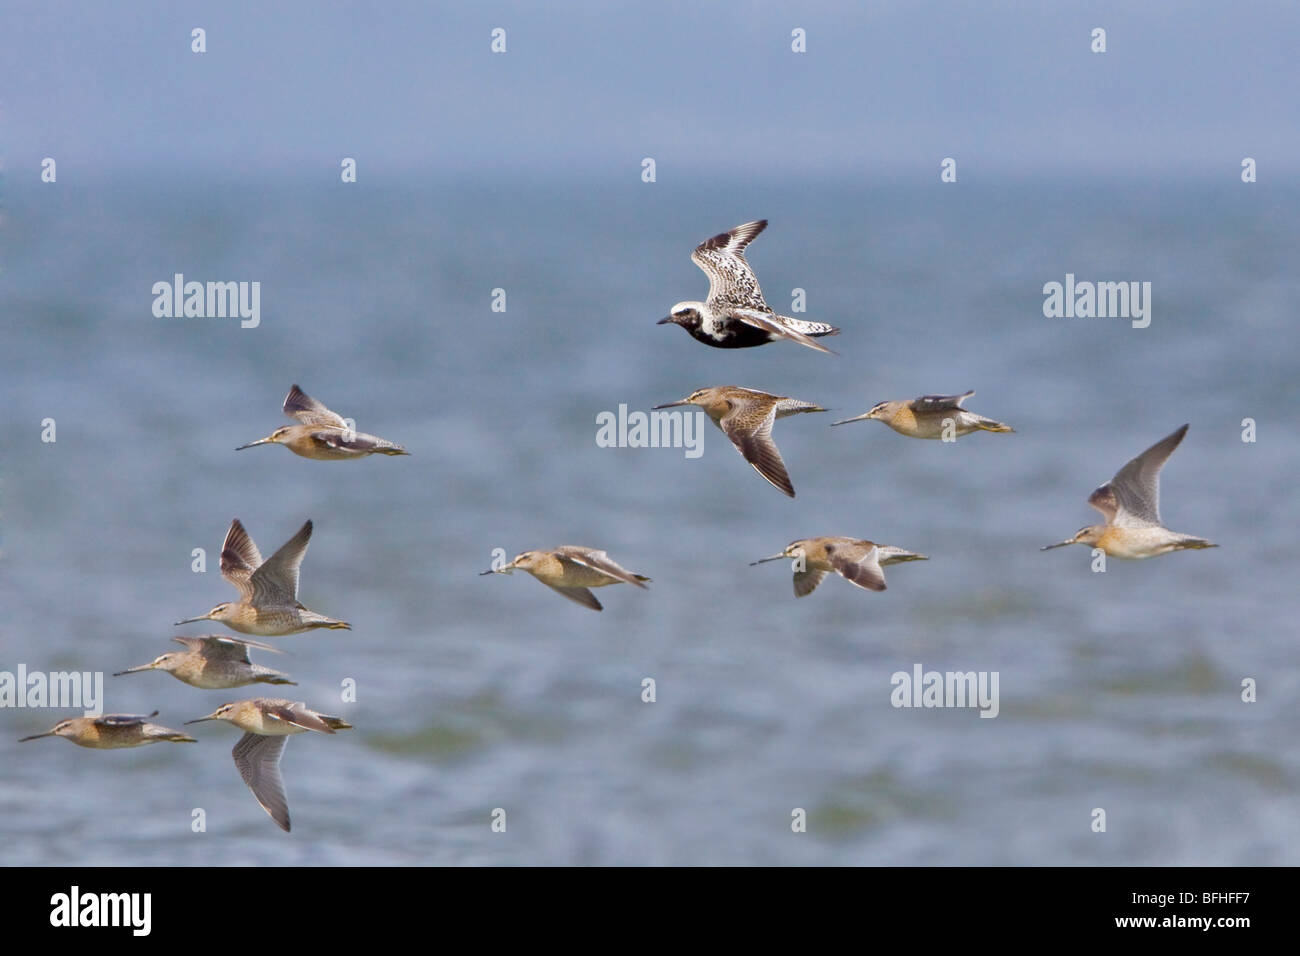 Shorebirds flying in Washington, USA. Stock Photo